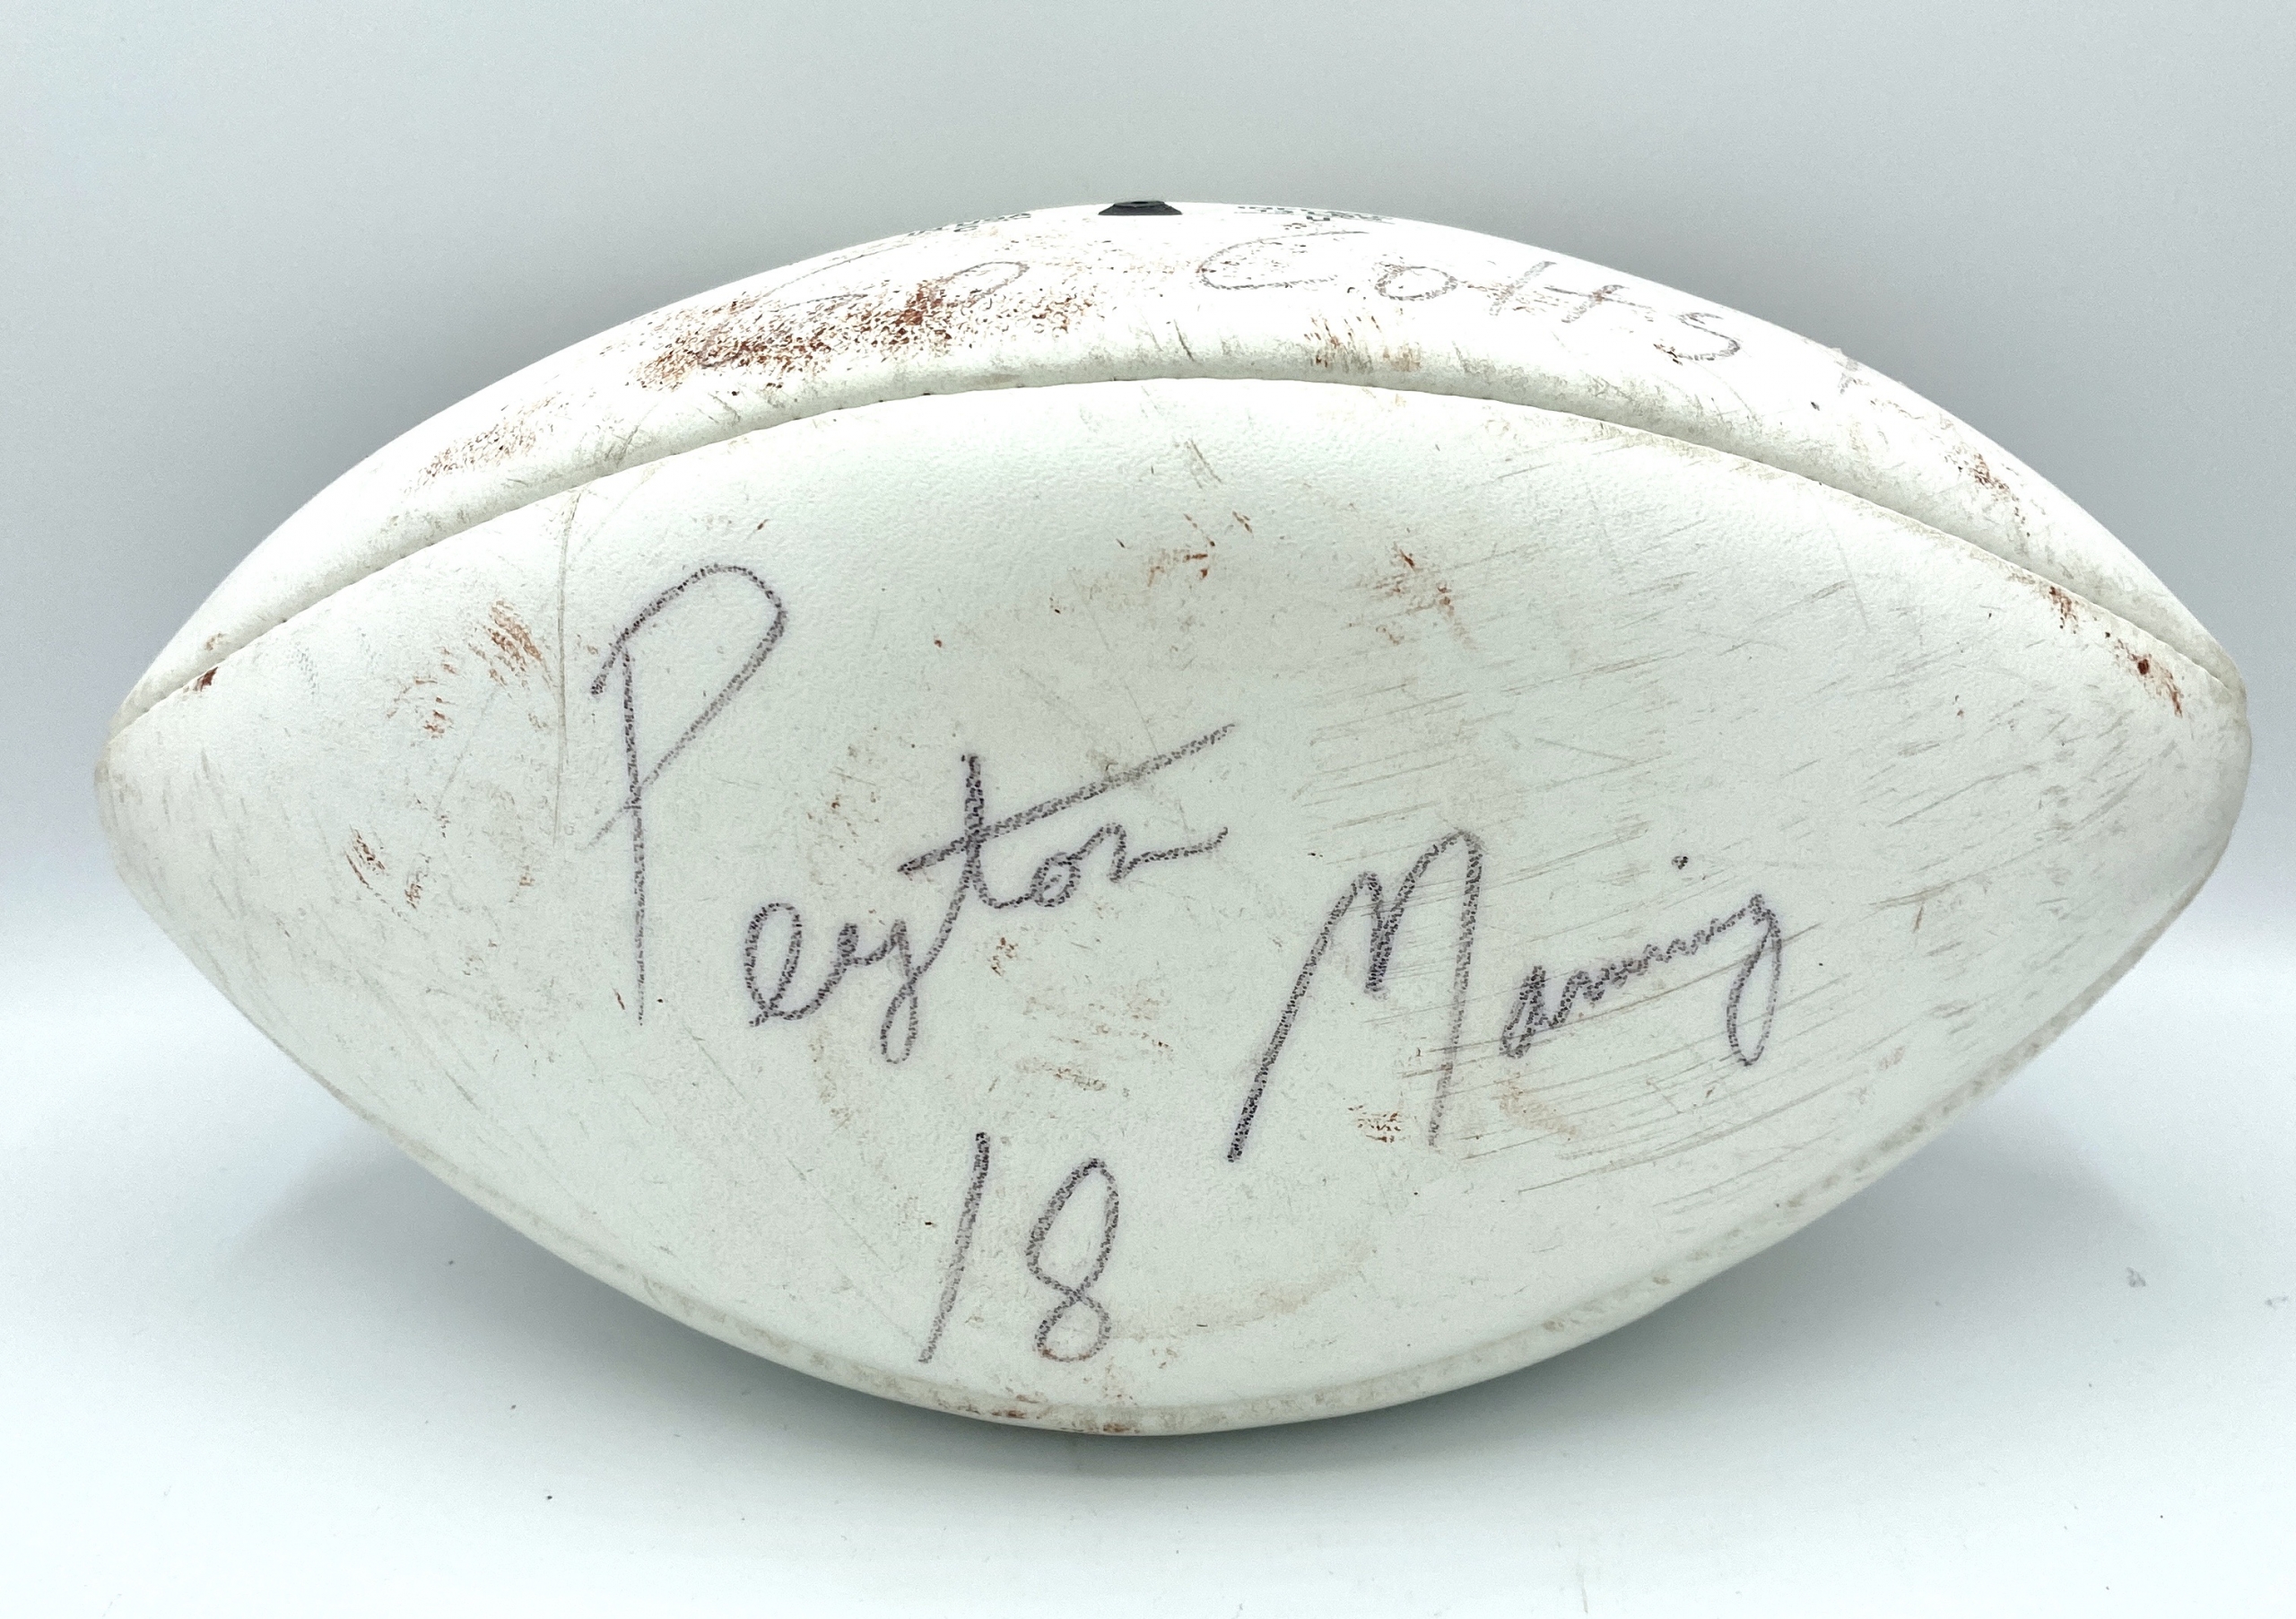 peyton manning autographed football